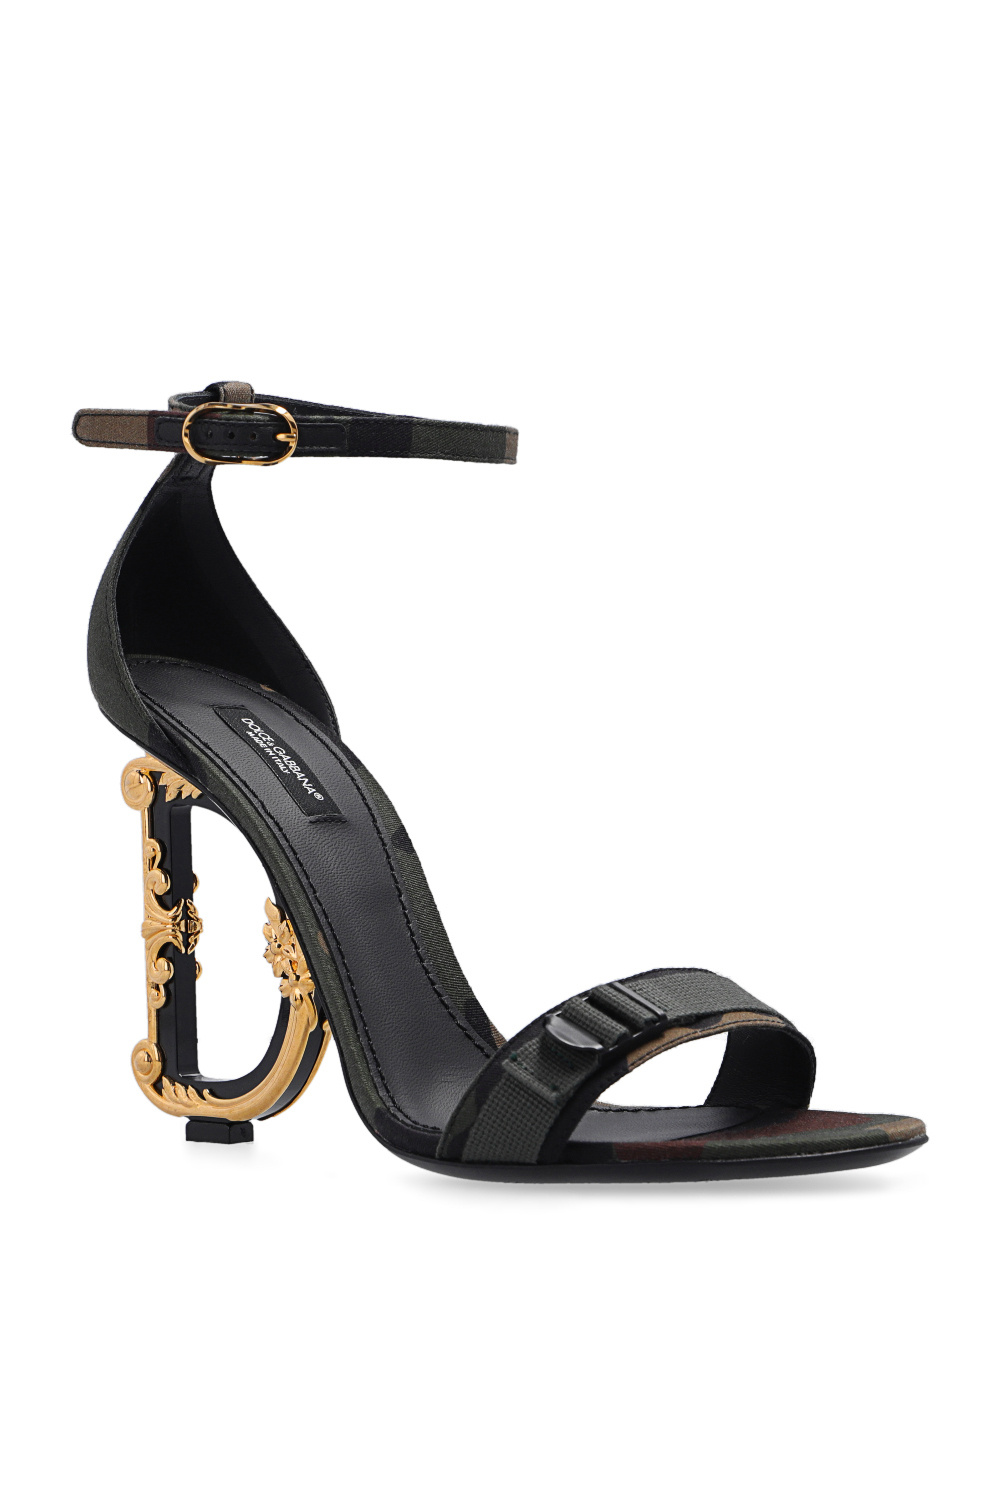 Dolce & Gabbana ‘Keira’ heeled raised